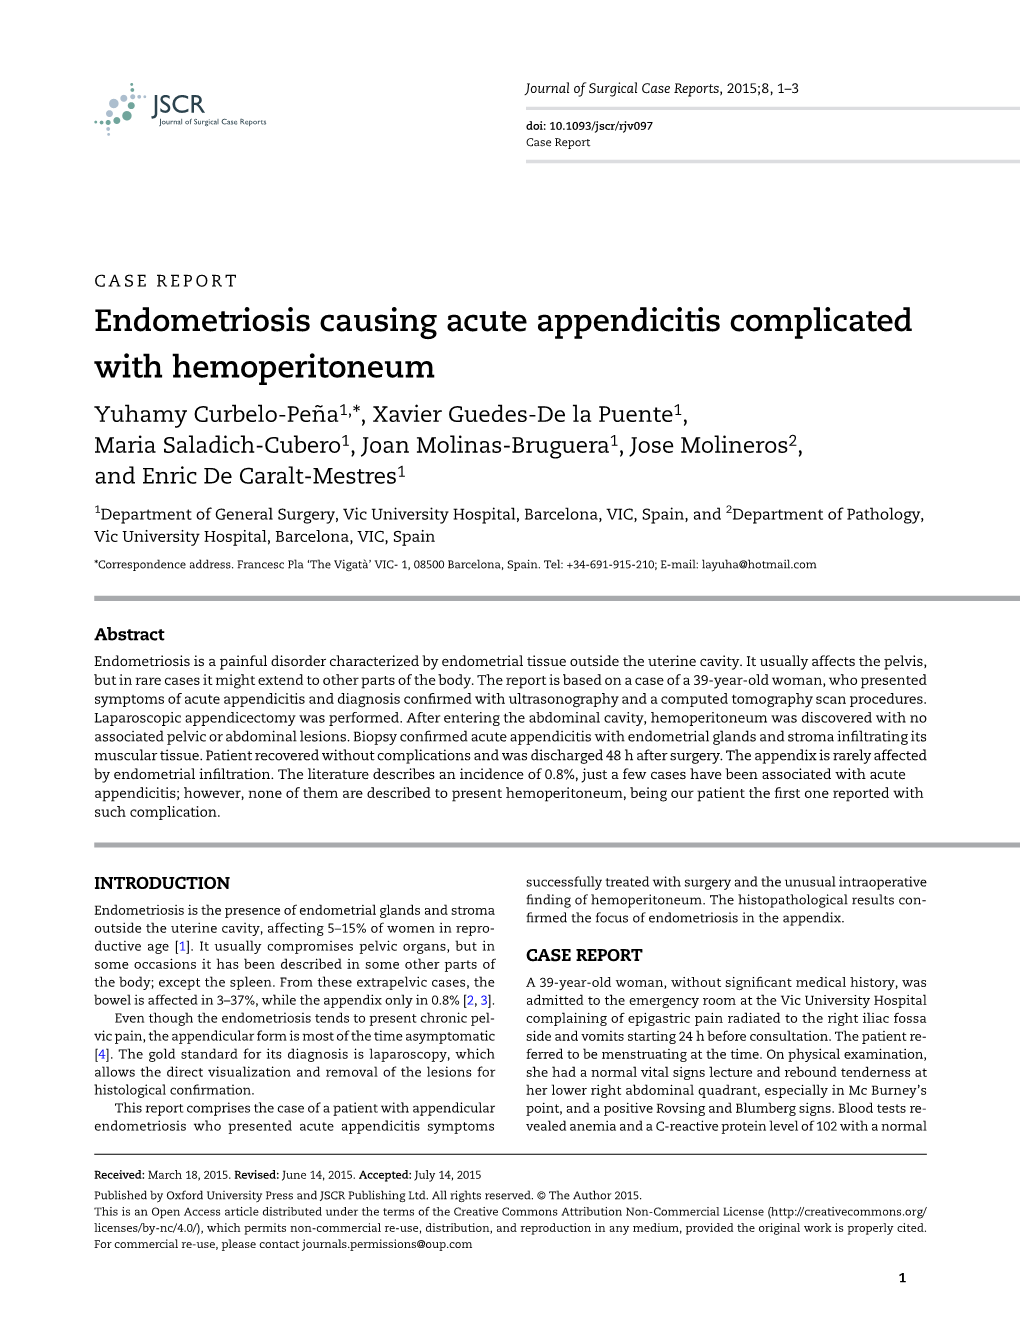 Endometriosis Causing Acute Appendicitis Complicated With